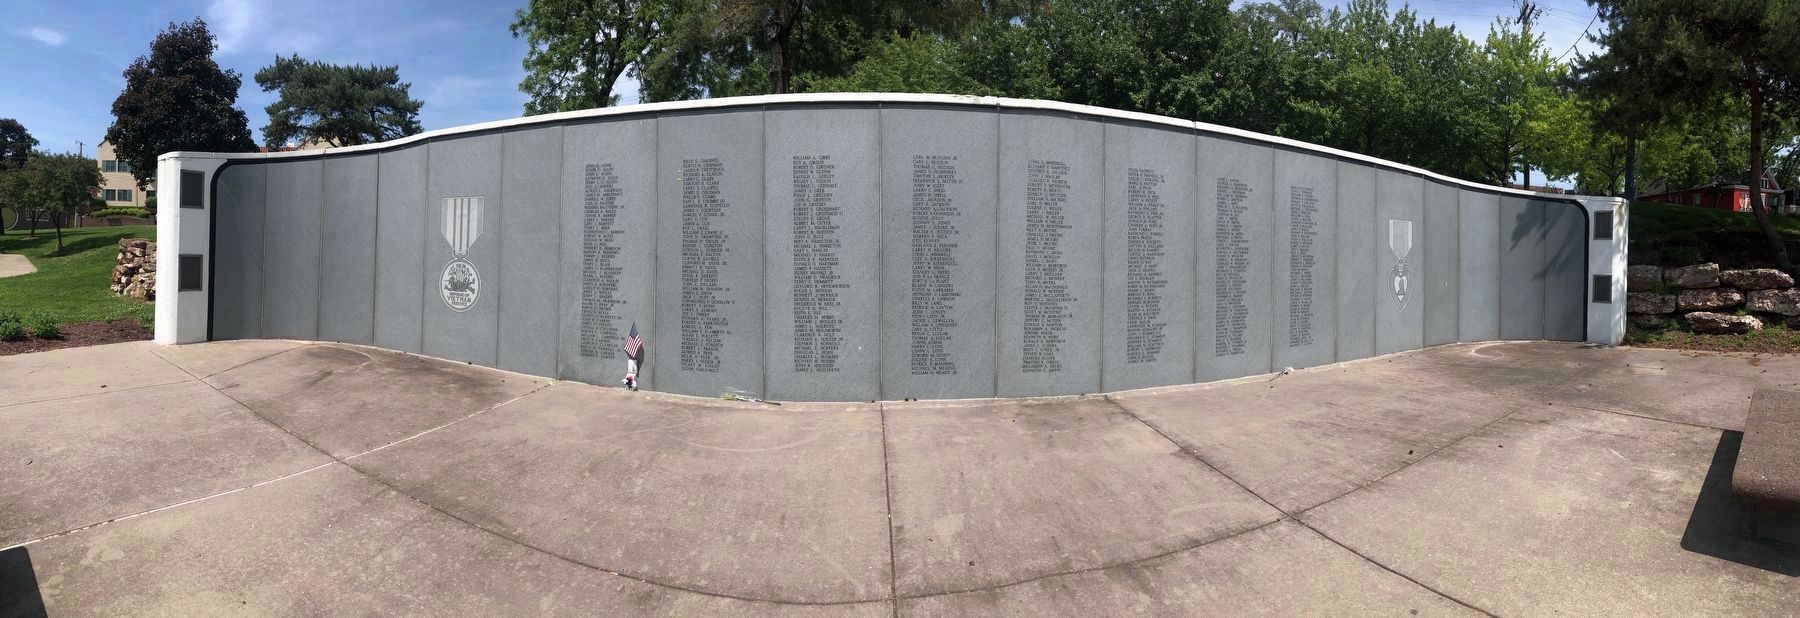 Kansas City Vietnam Veterans Memorial Fountain Wall image. Click for full size.